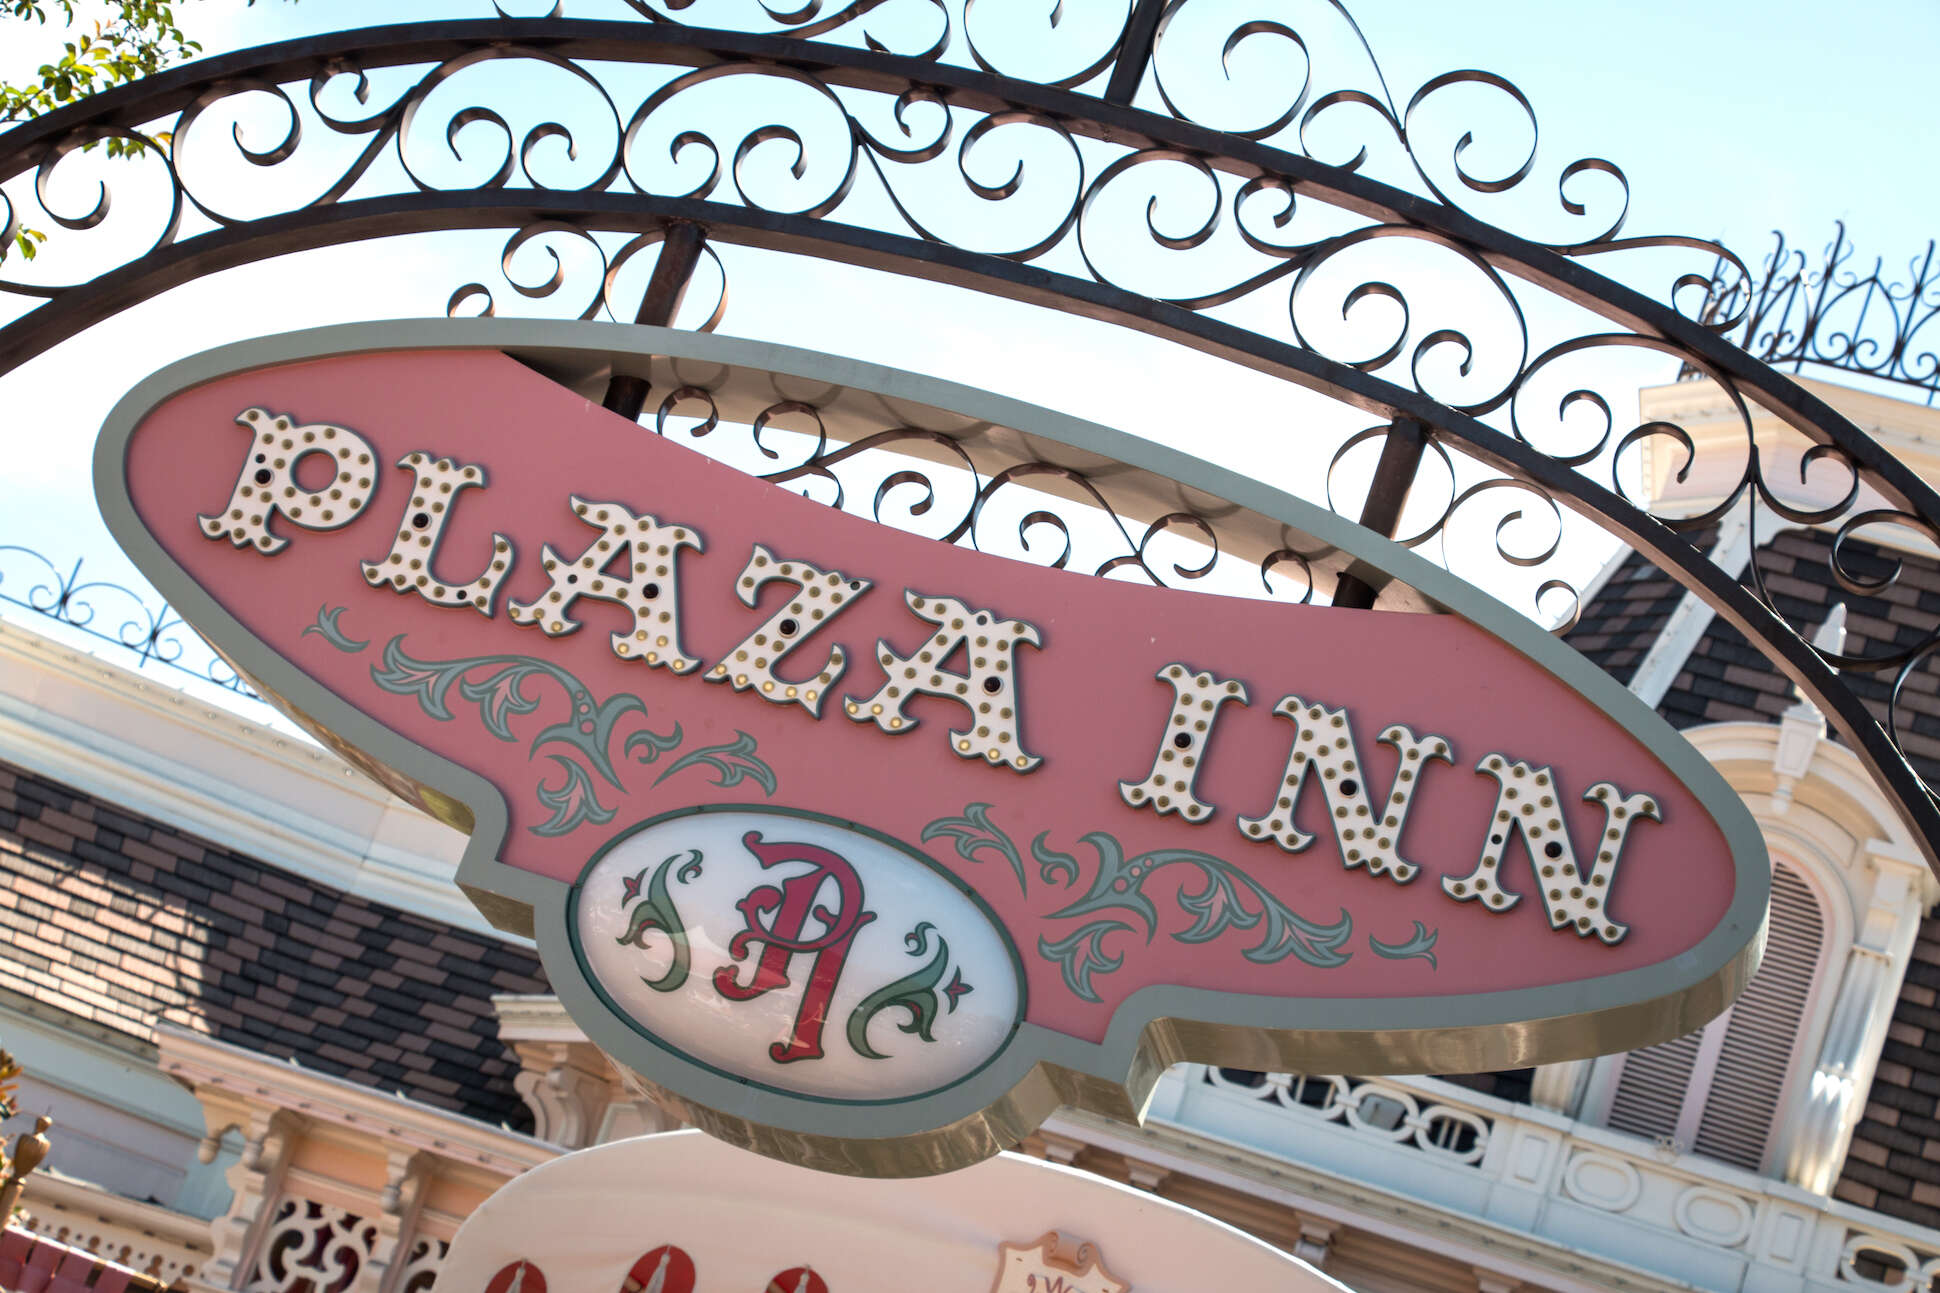 Plaza Inn. Disneyland Plaza Inn